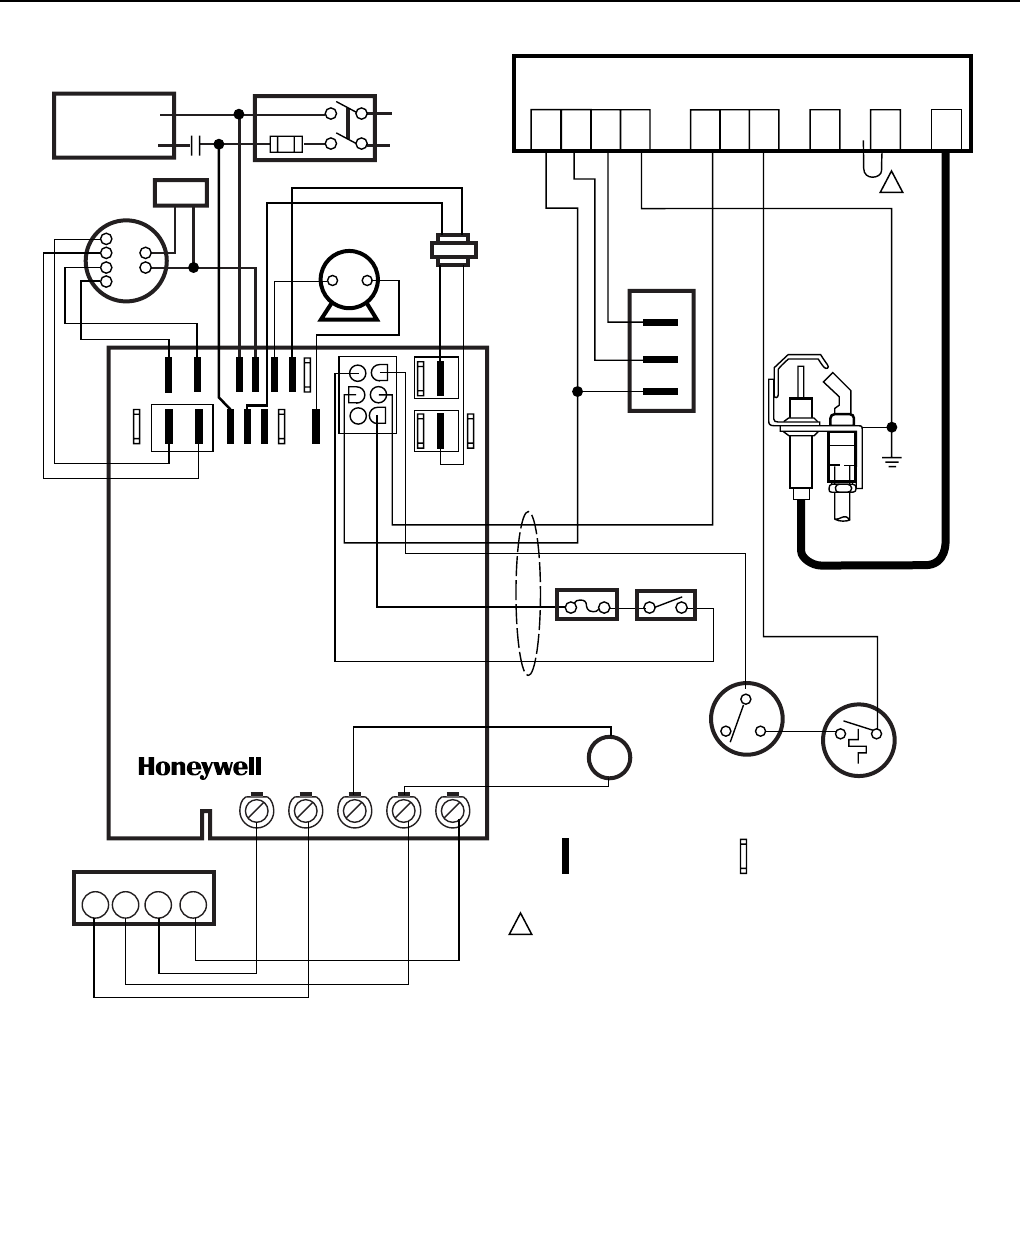 Honeywell S8610U Wiring Diagram from usermanual.wiki